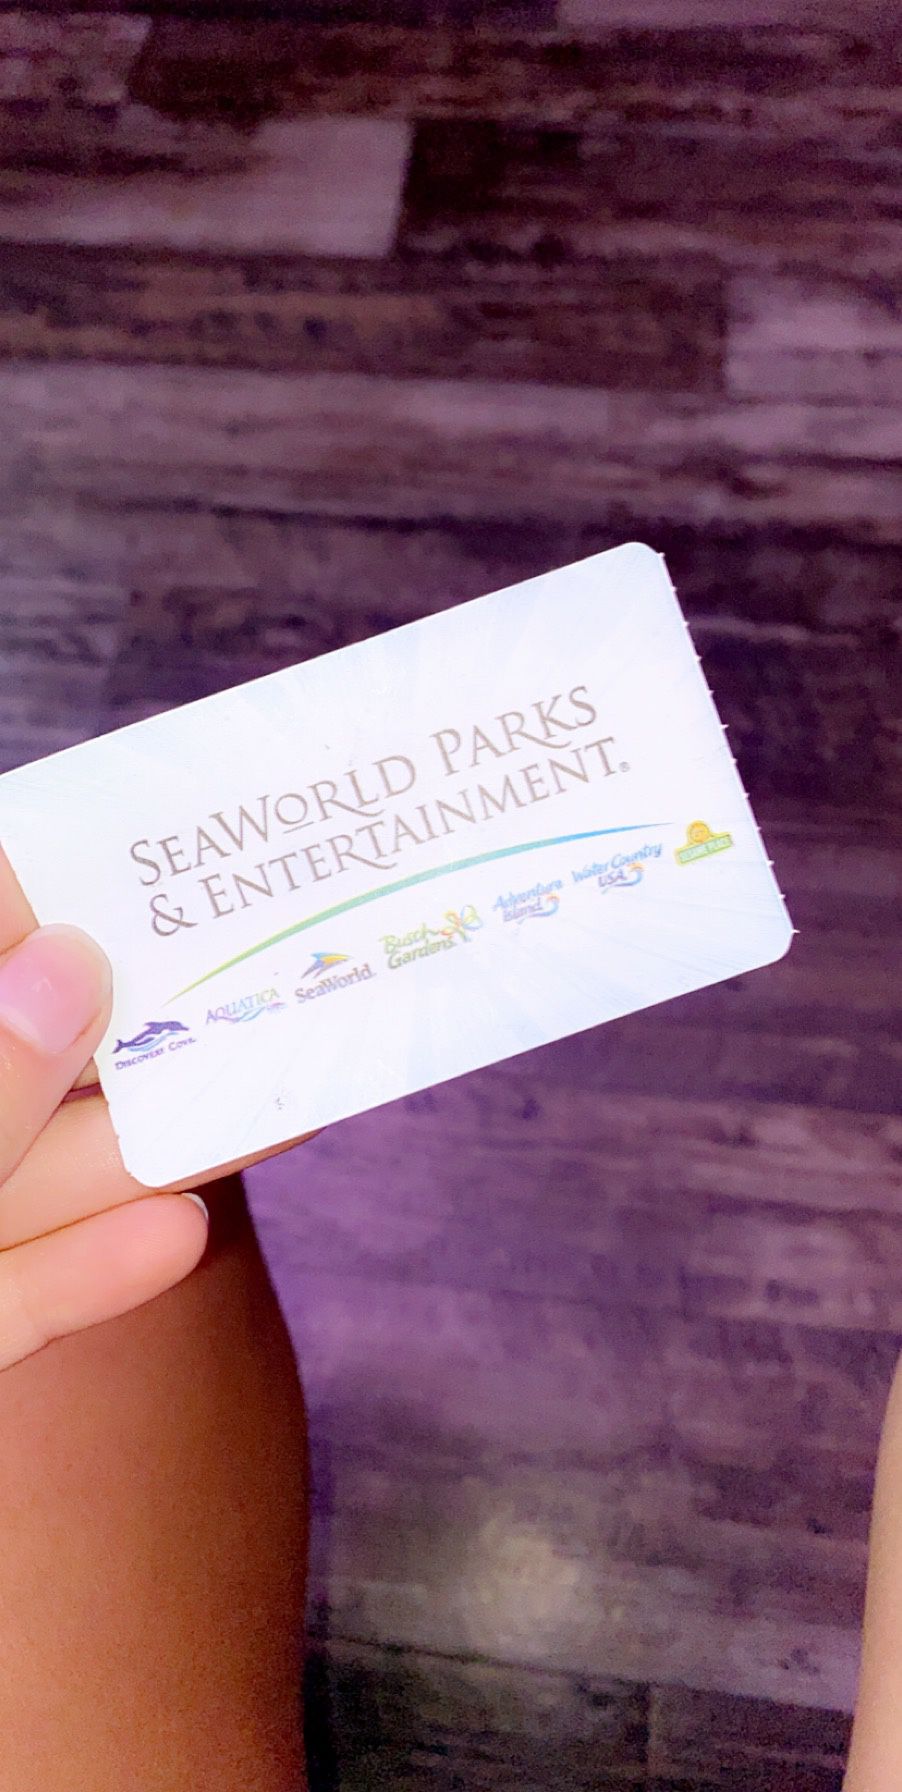 Seaworld Ticket